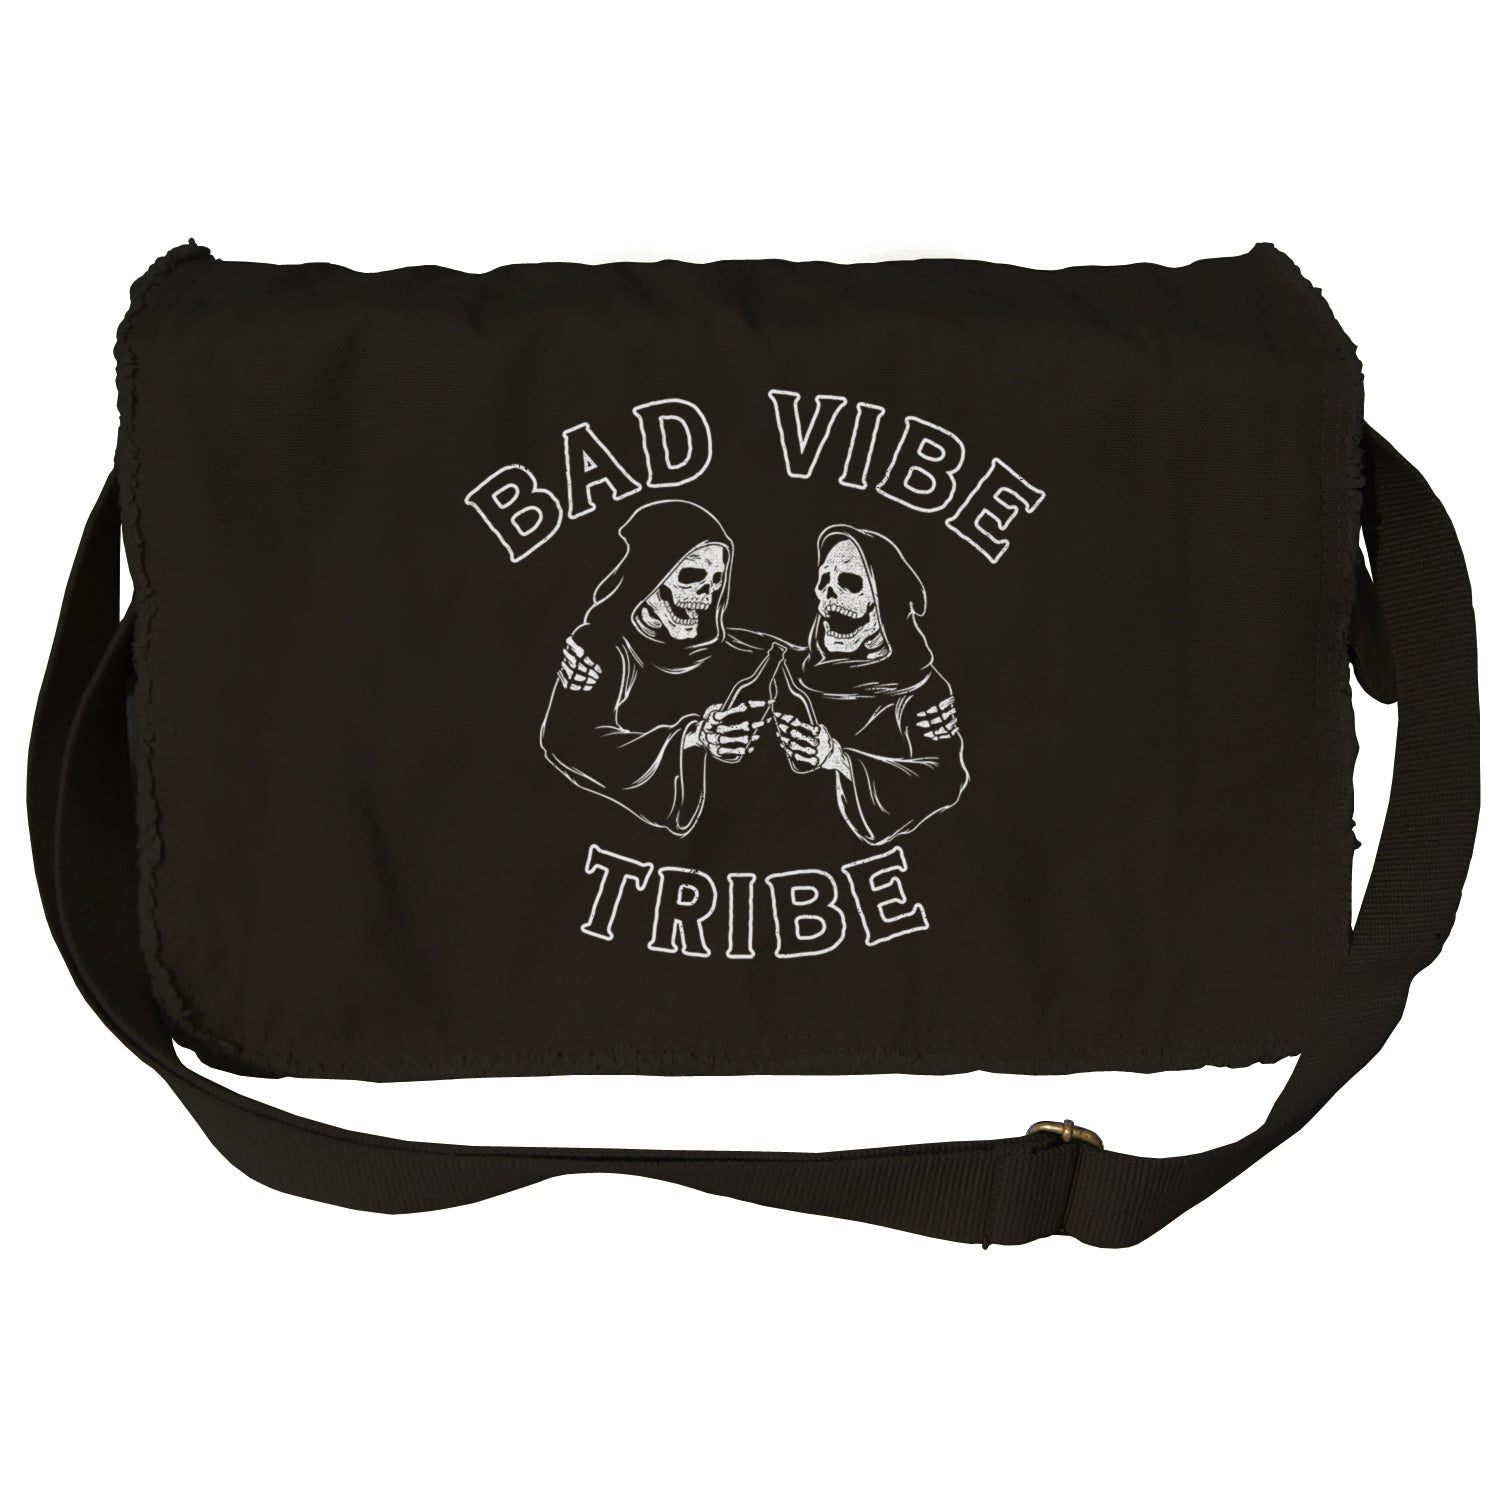 Bad Vibe Tribe Messenger Bag